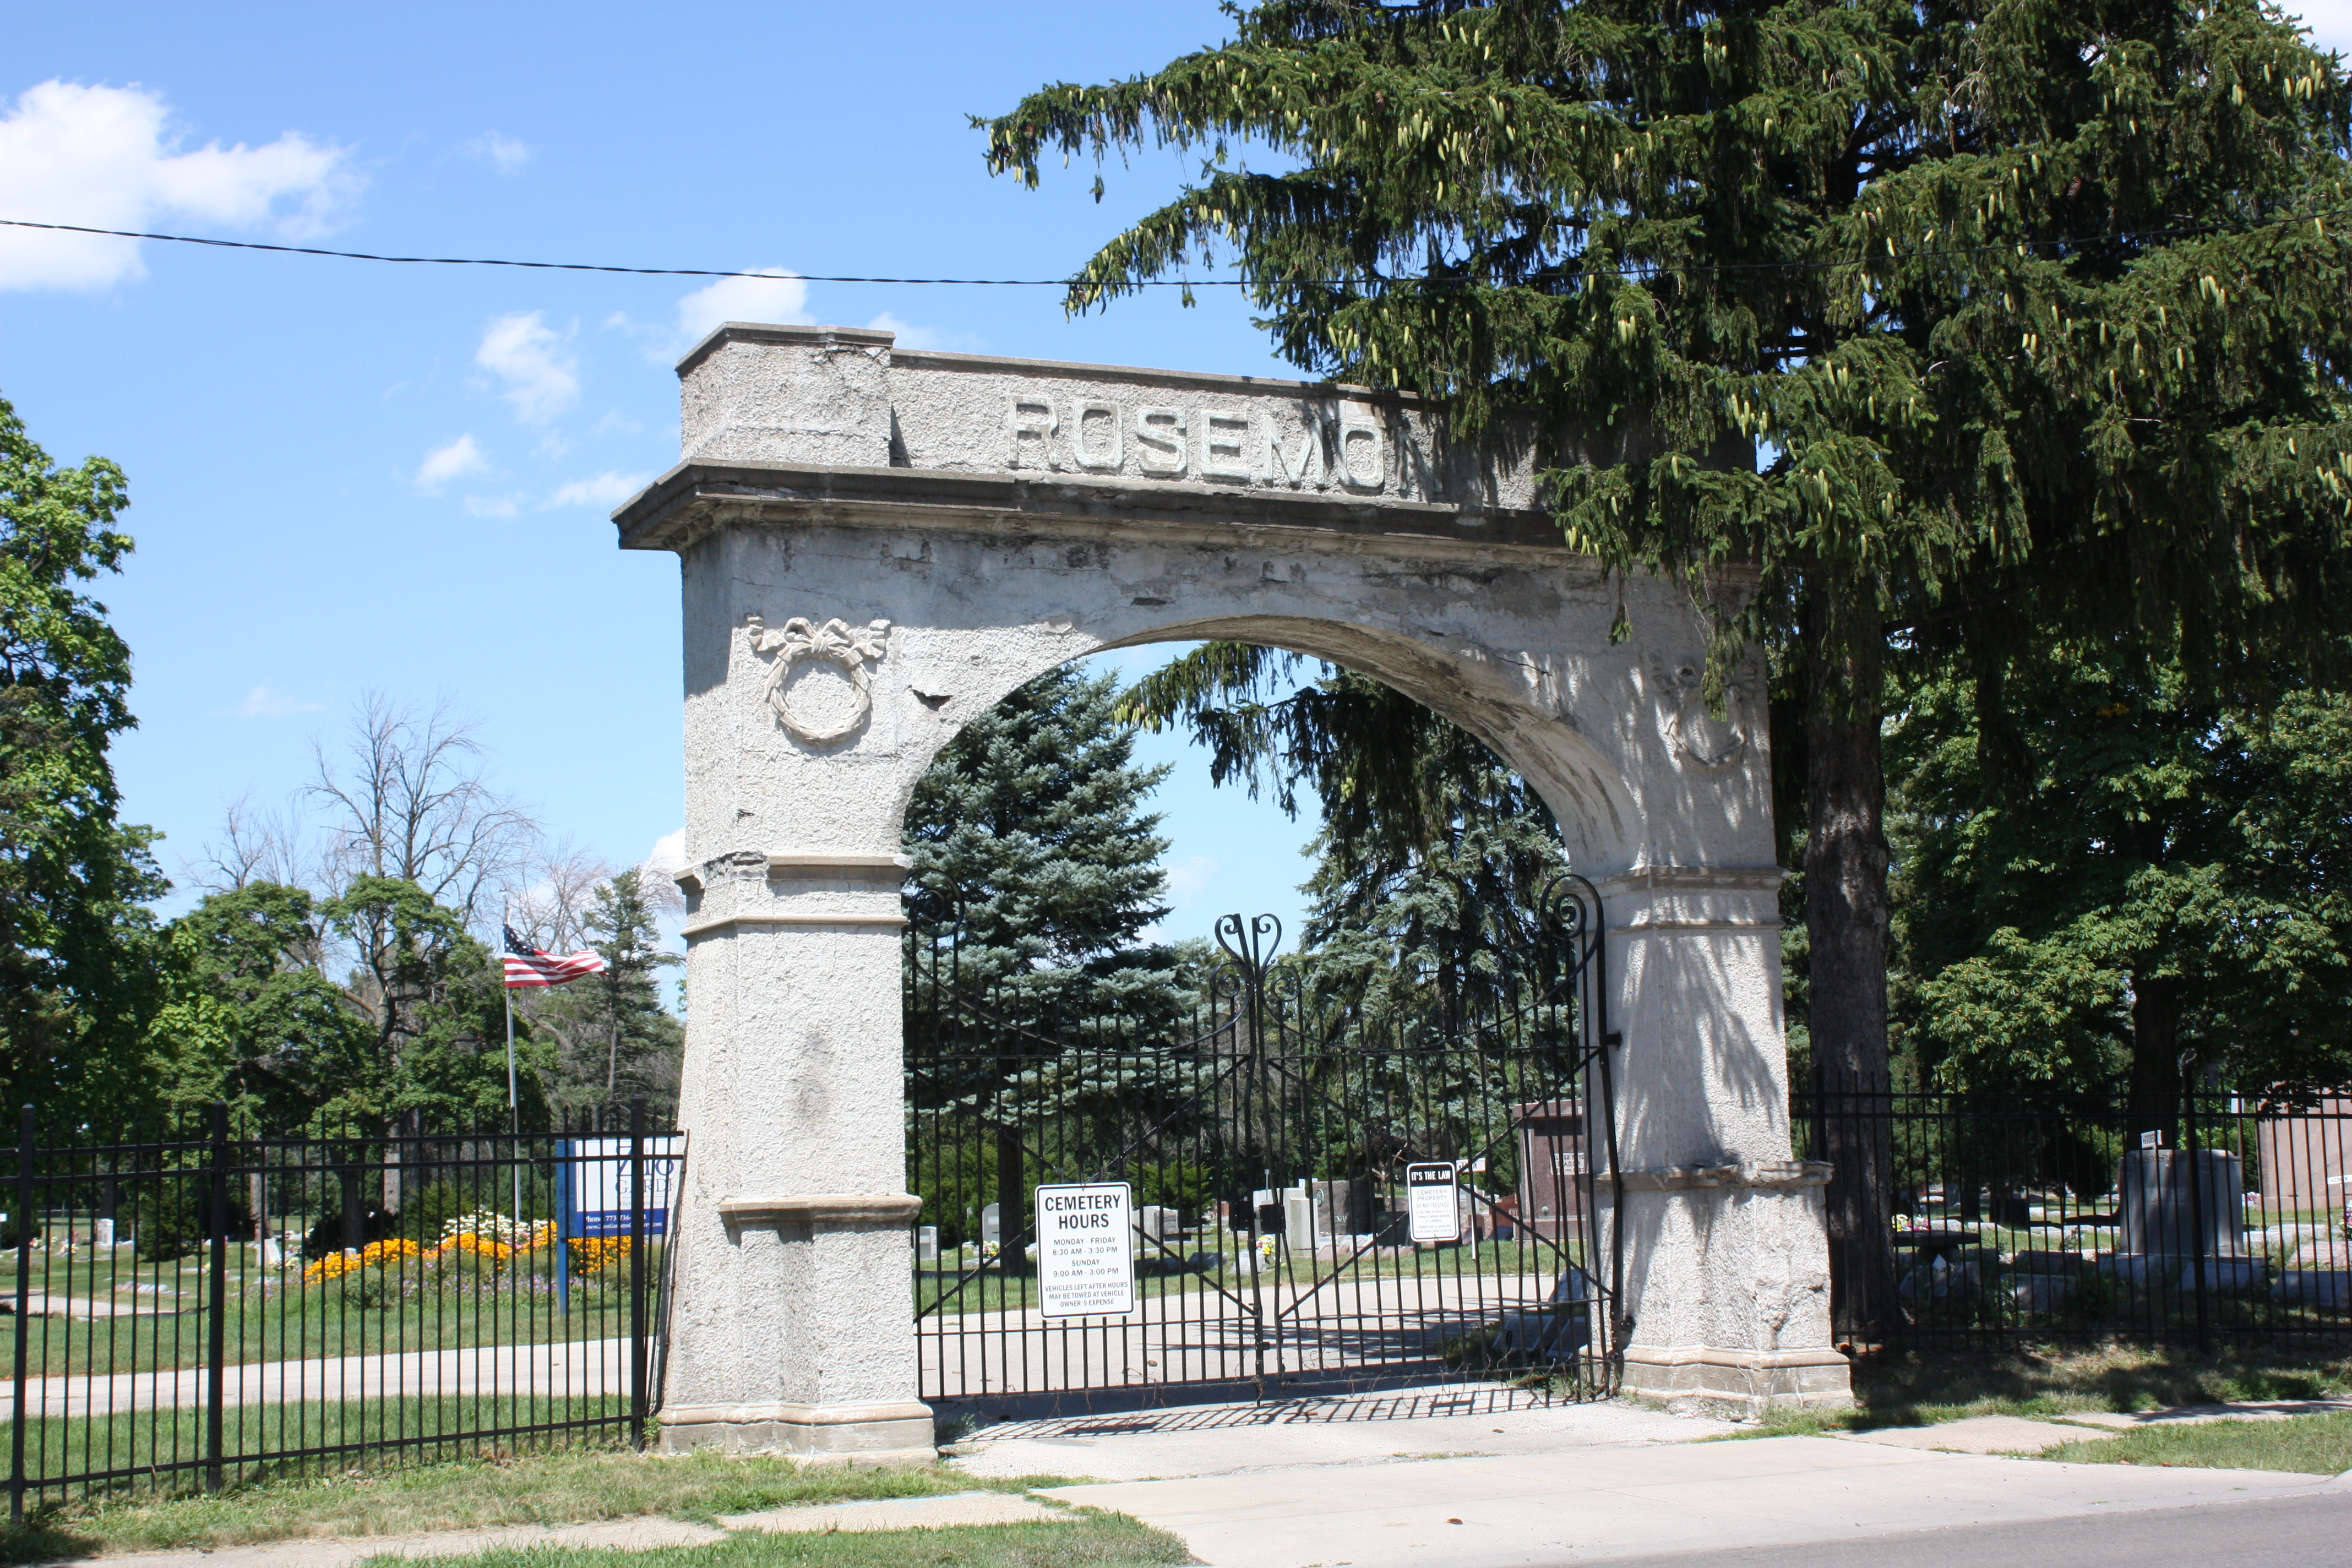 Rosemont Park Cemetery entrance gate